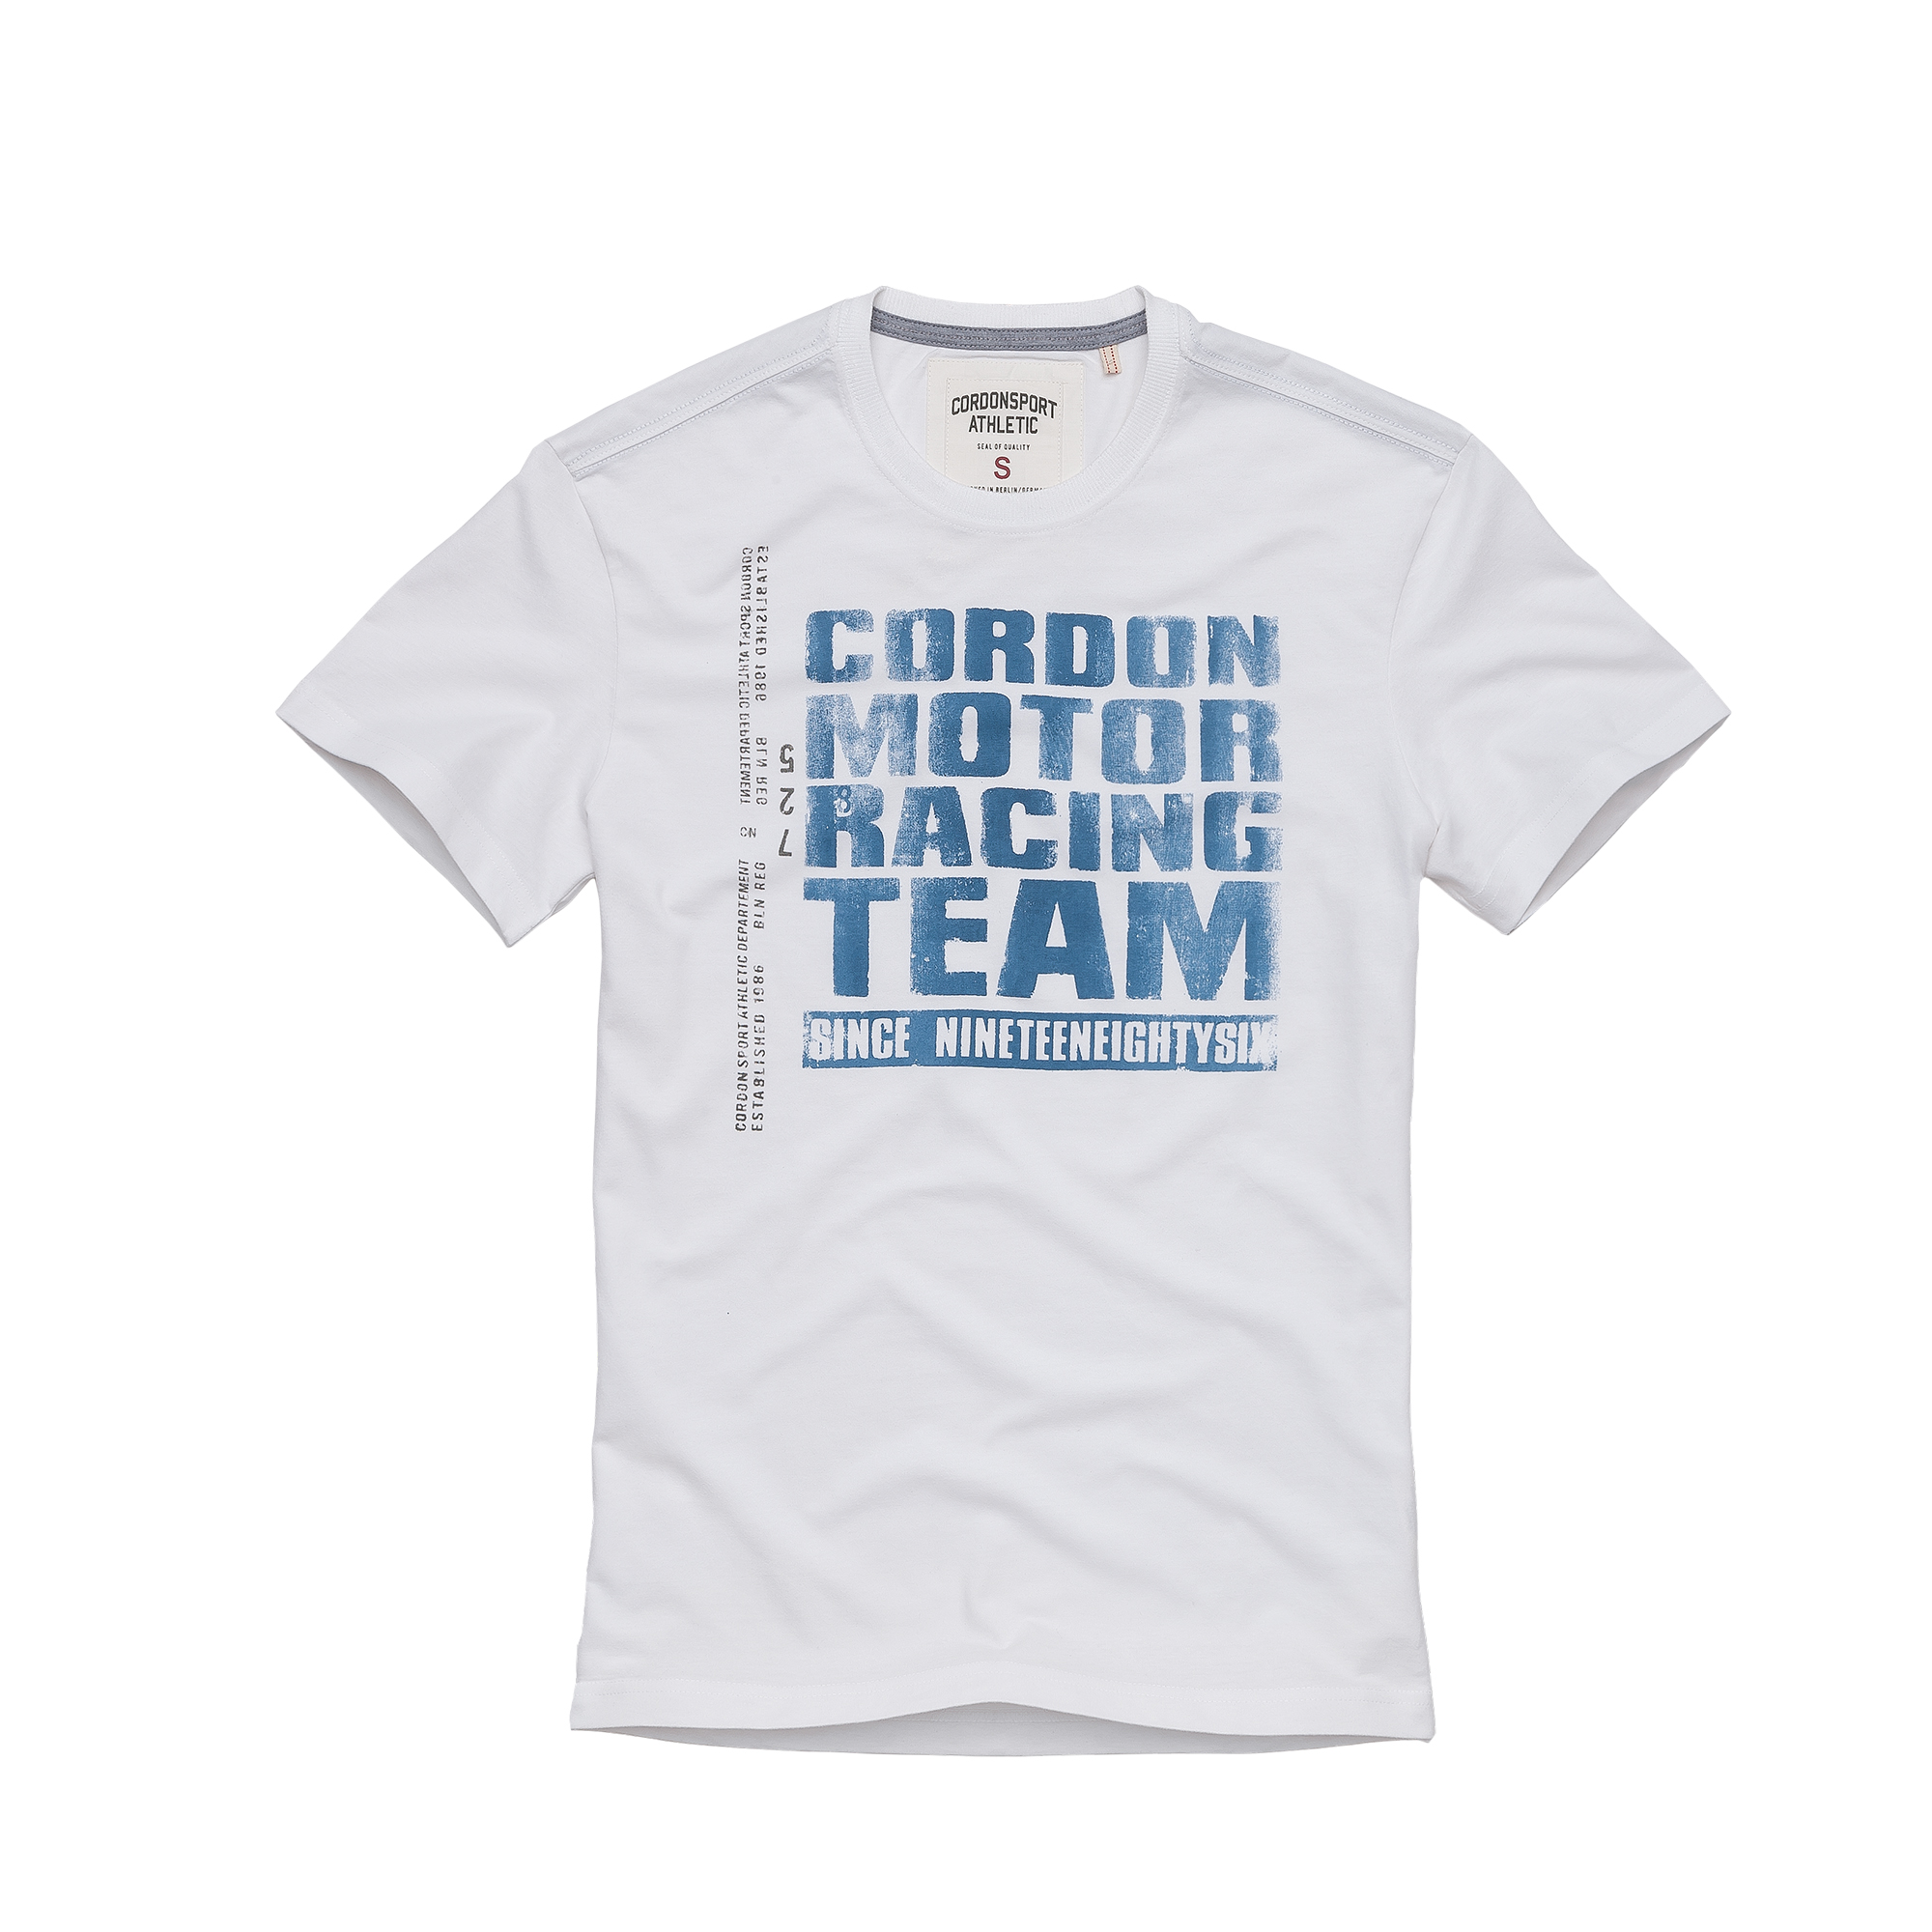 Cordon T Shirt Racing